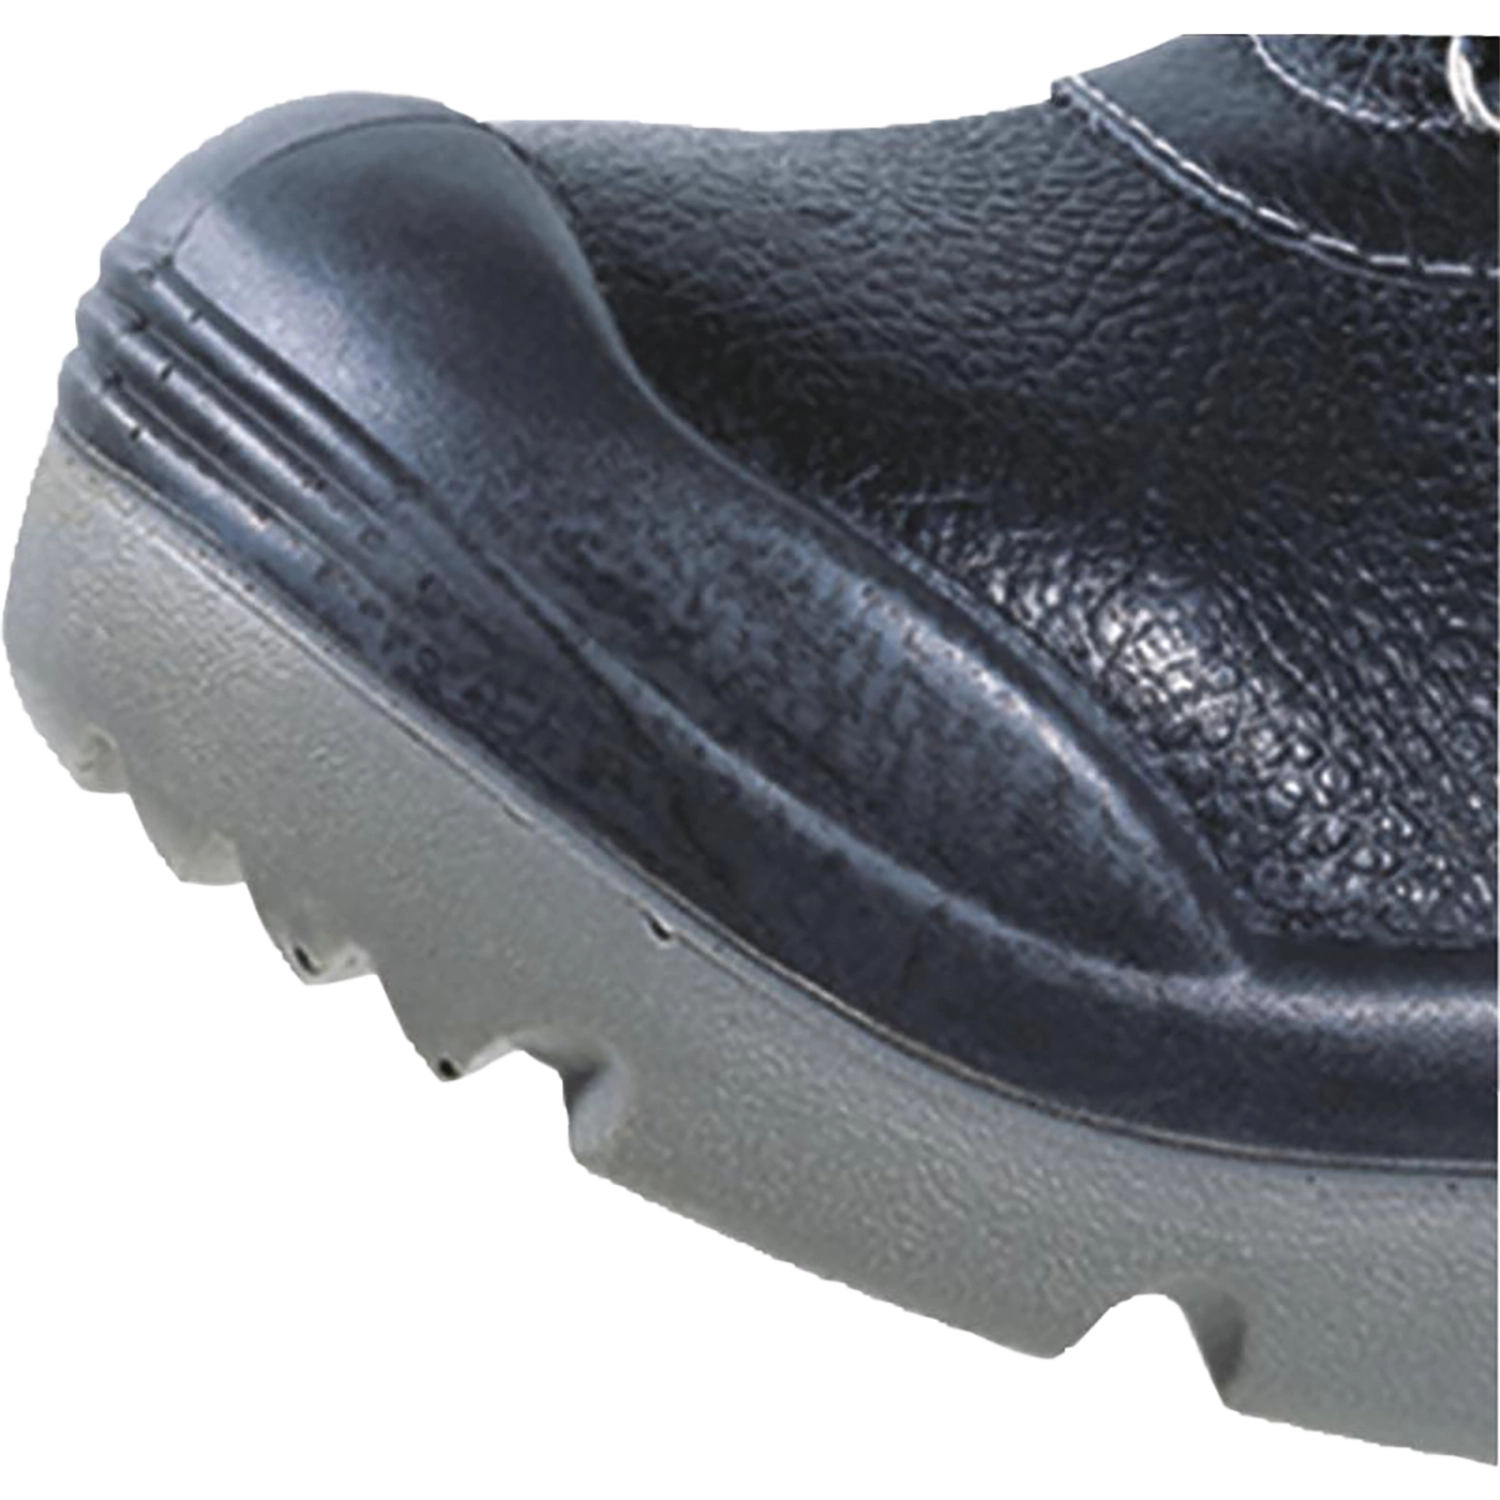 Chaussures montantes - X-Large - Sault S3 - noir - taille 46